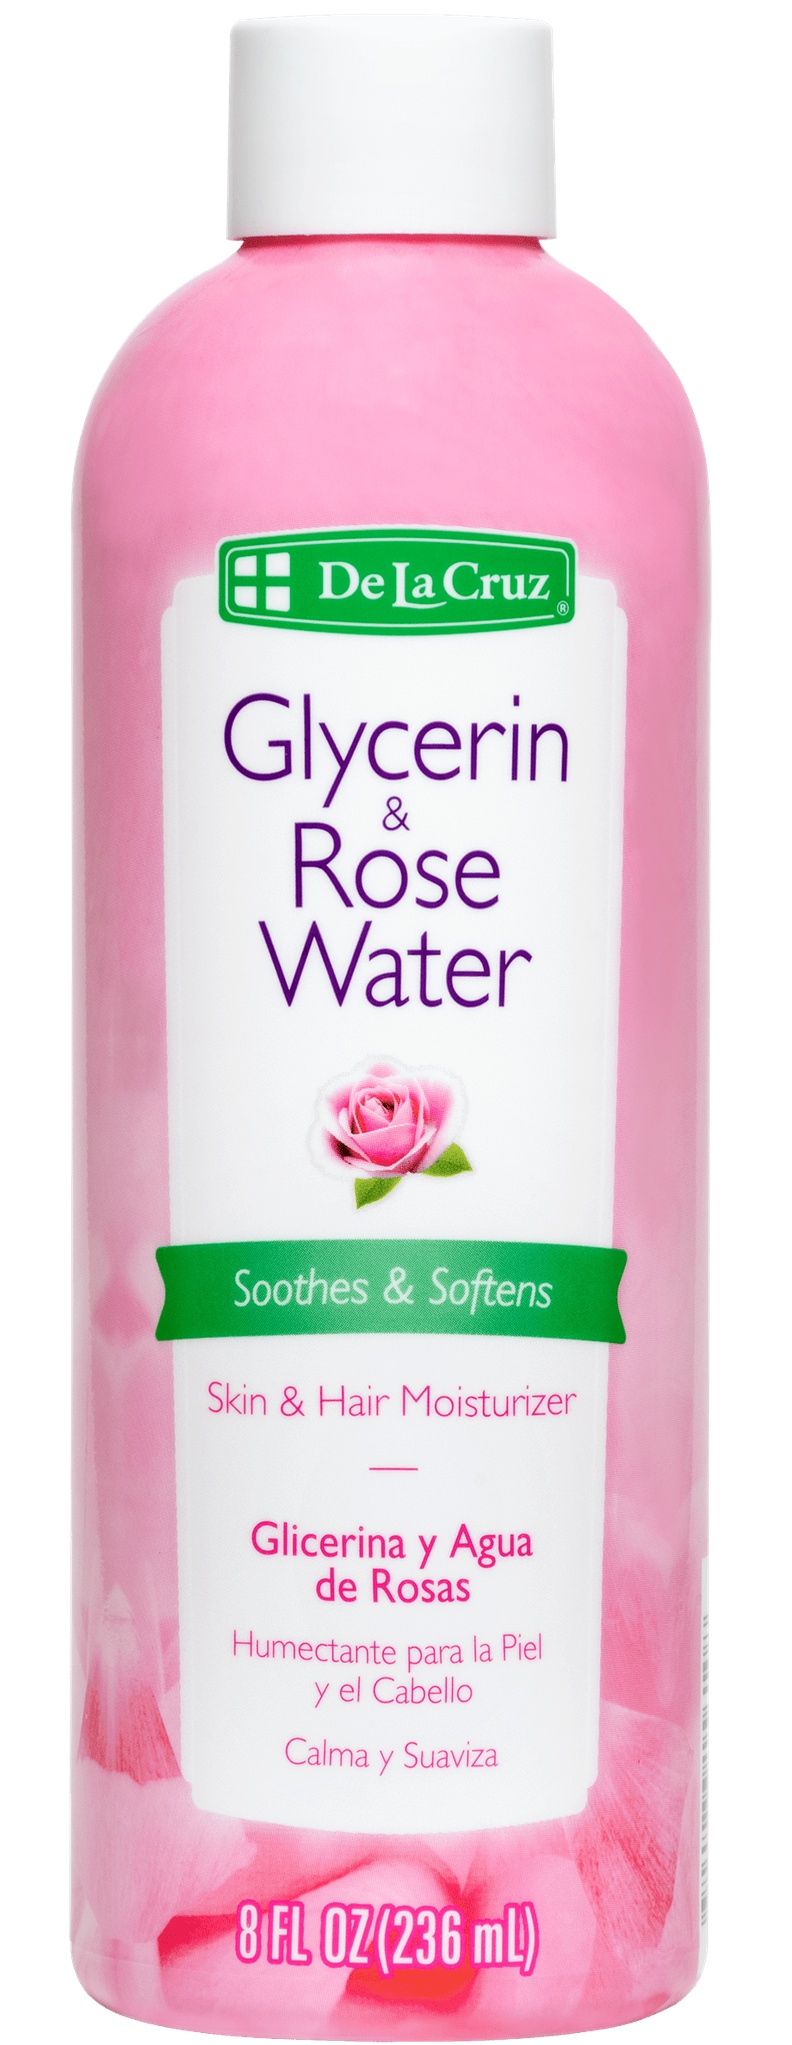 De La Cruz Glycerin & Rose Water